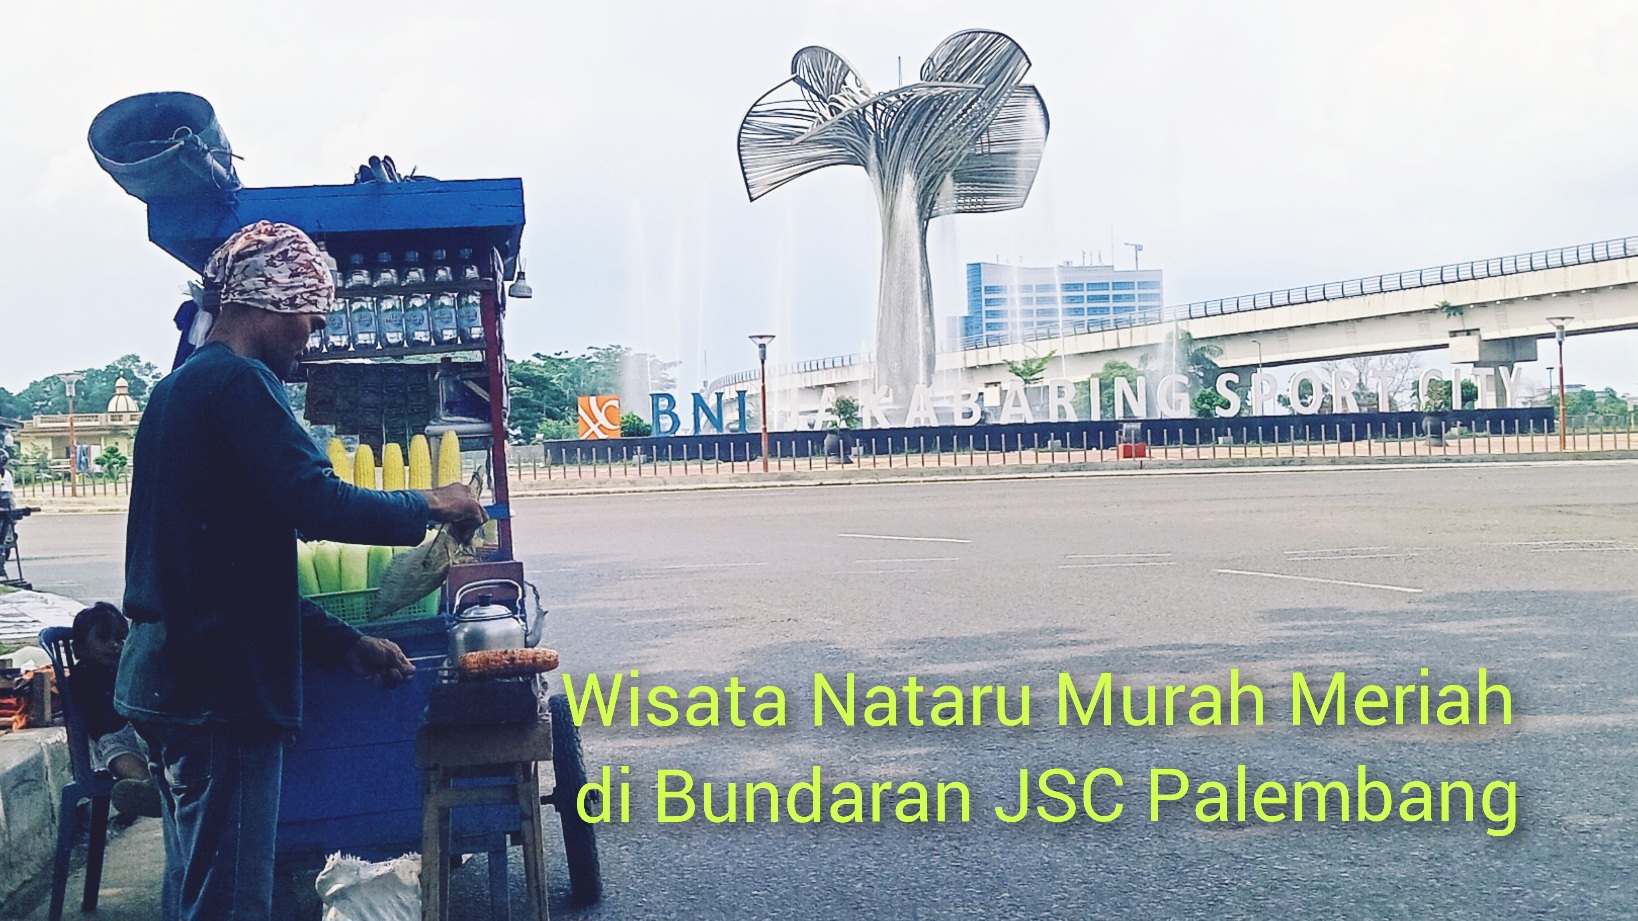 Wisata Nataru Murah Meriah di Bundaran JSC Palembang, Enaknya Sambil Makan Jagung Bakar